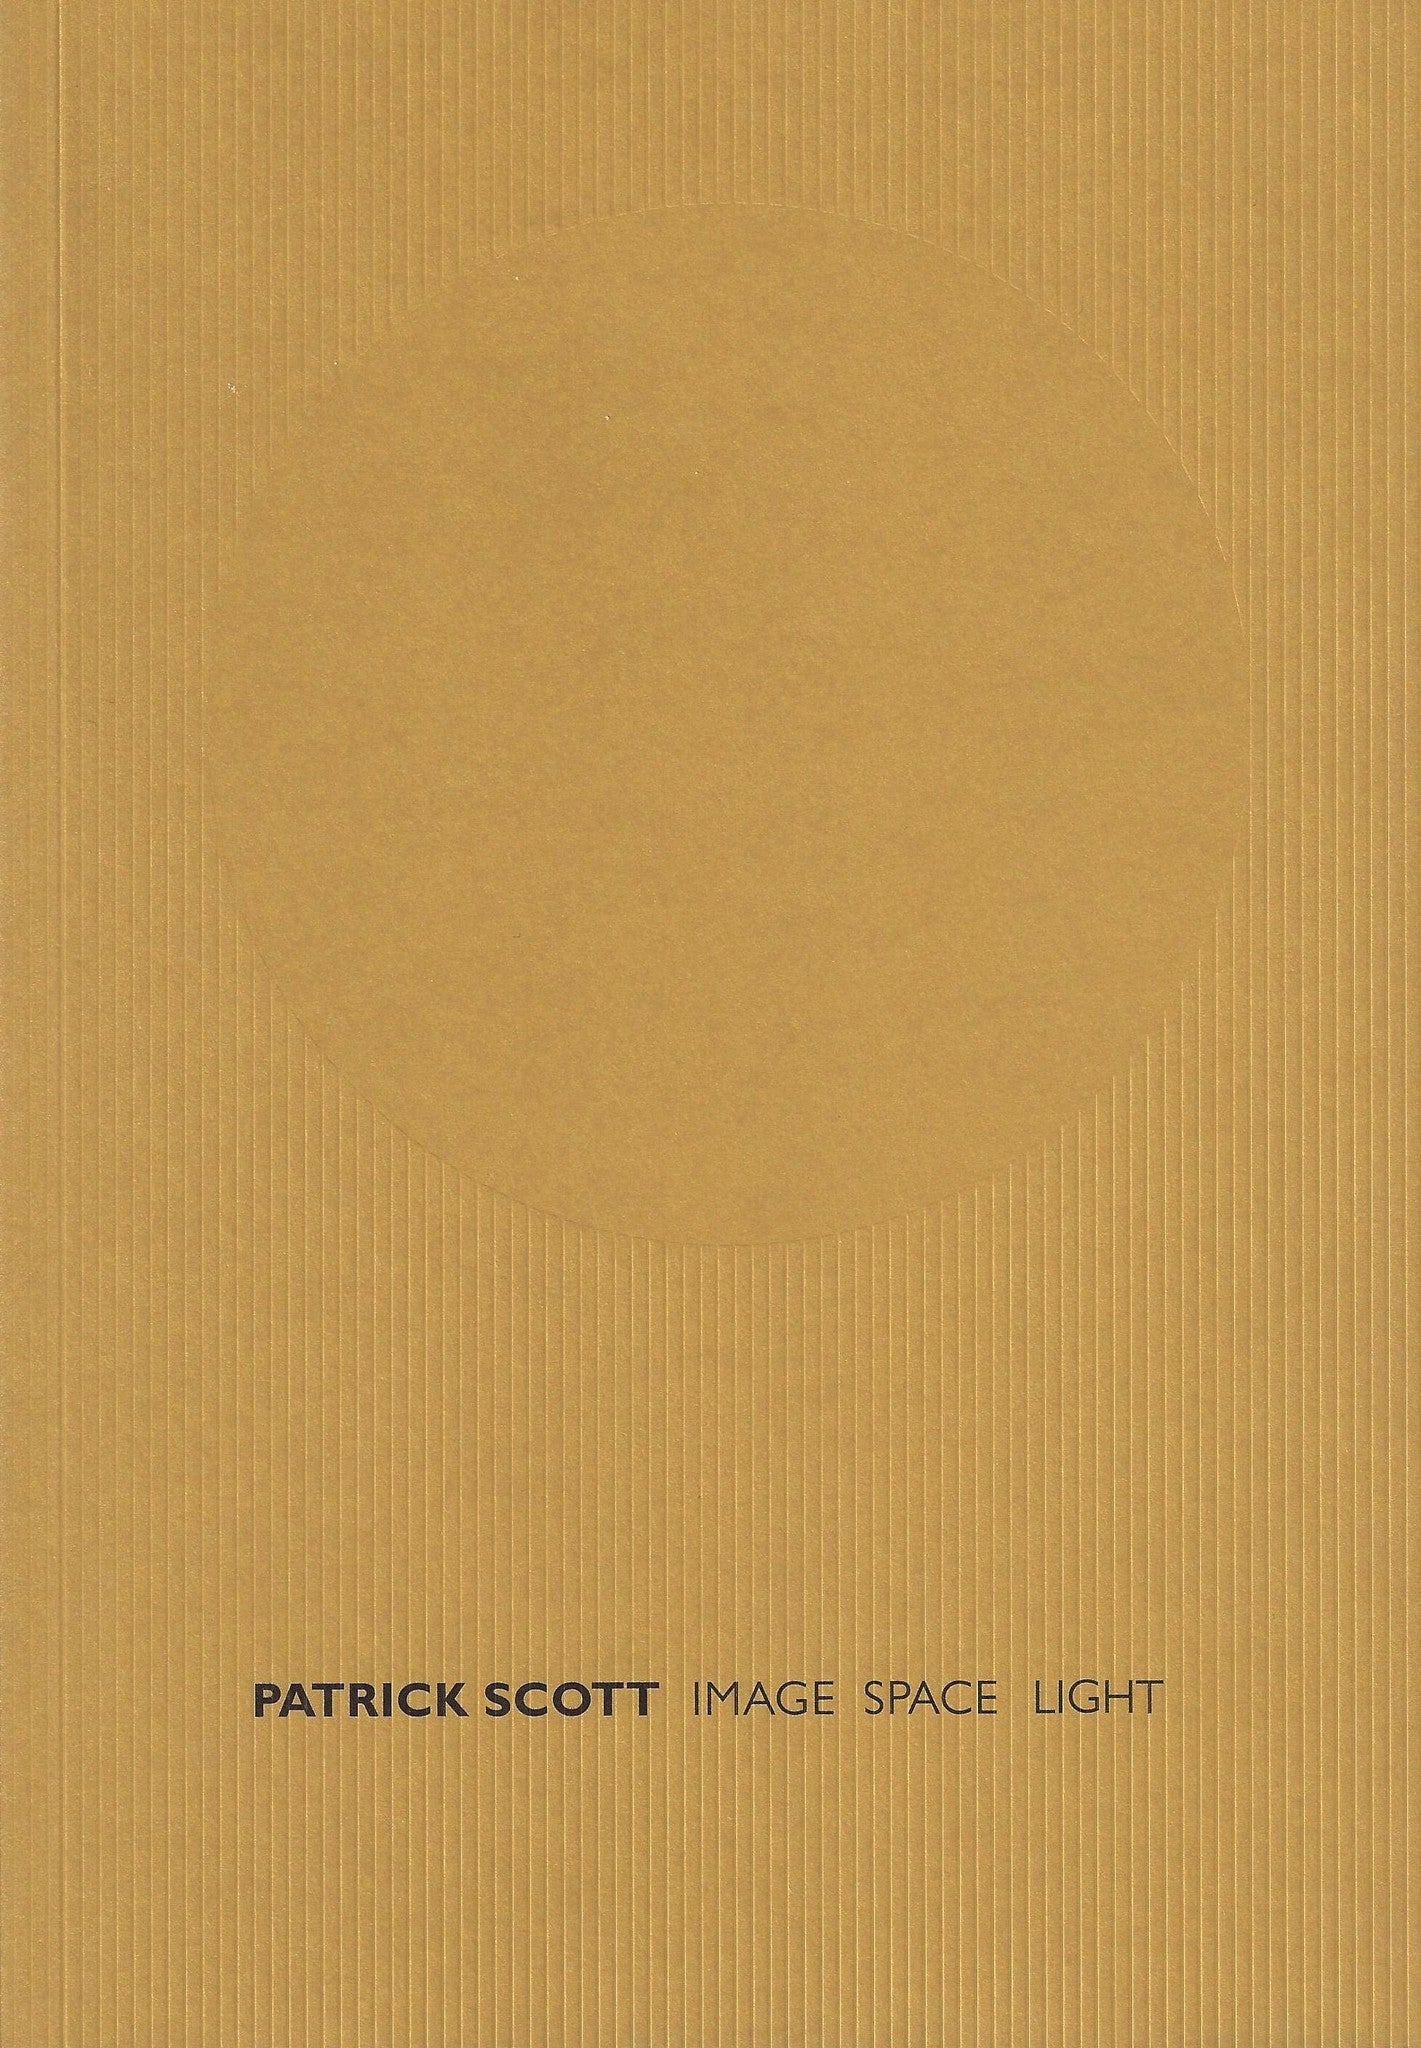 Patrick Scott: Image Space Light